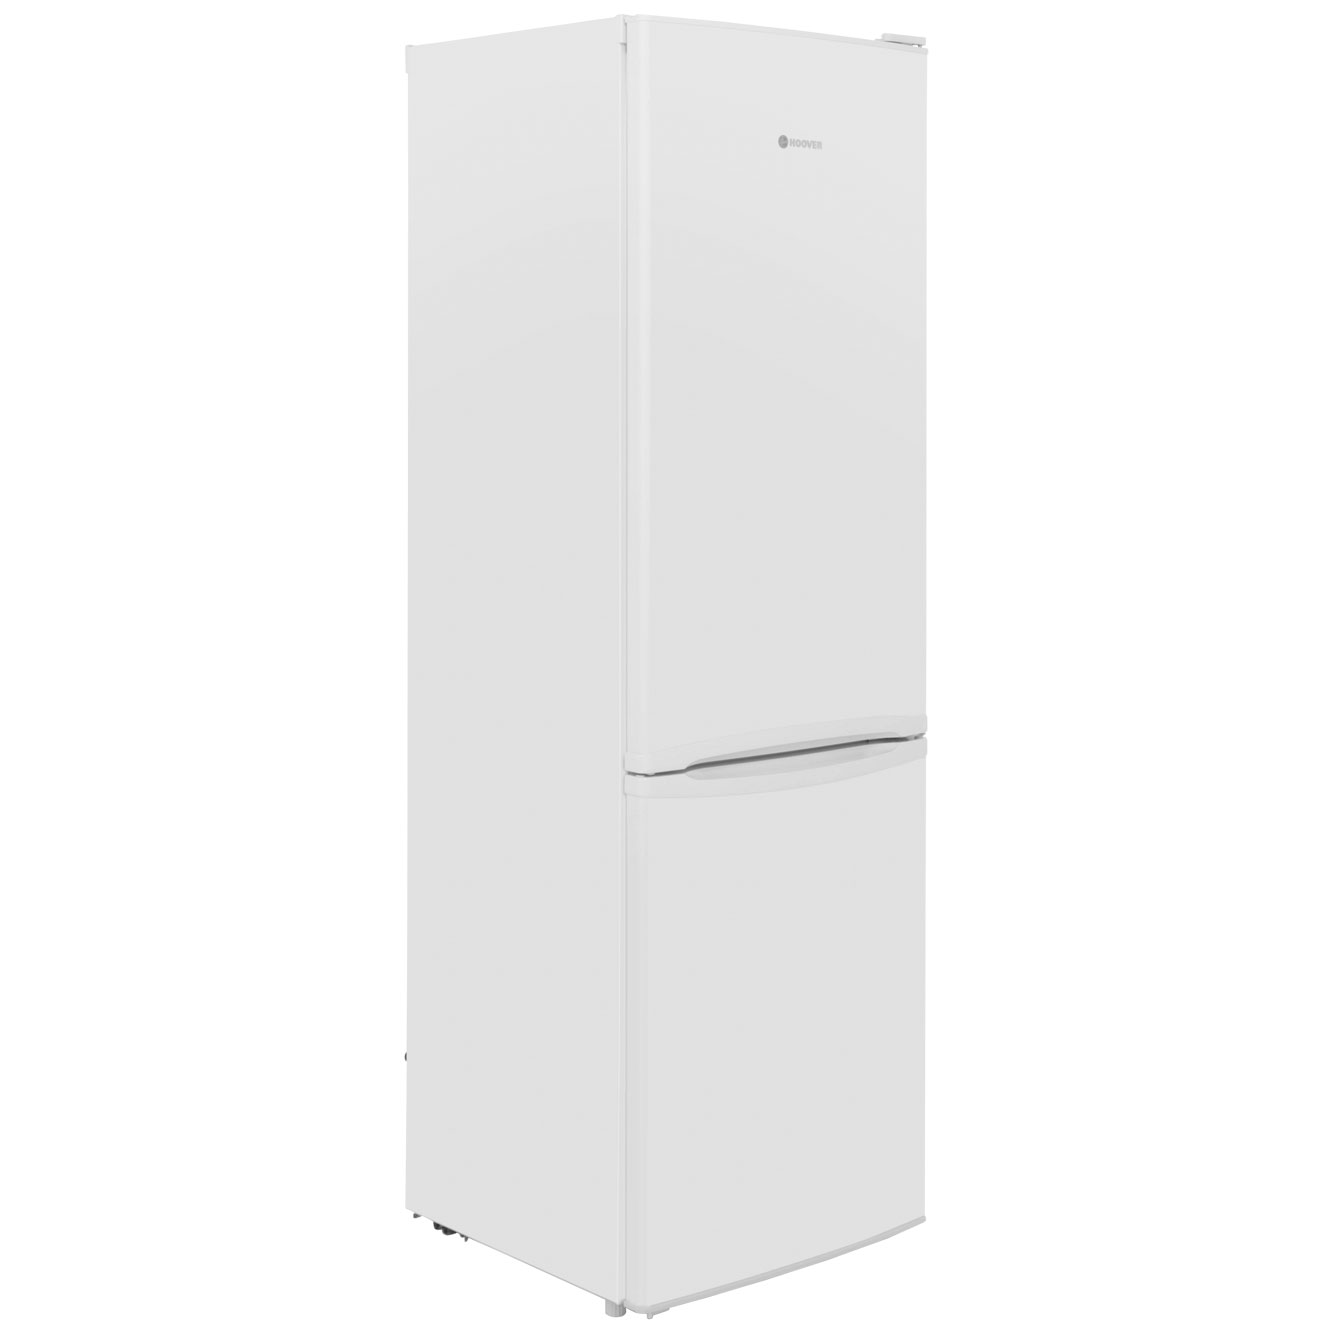 Hoover HSC185WE Free Standing Fridge Freezer in White